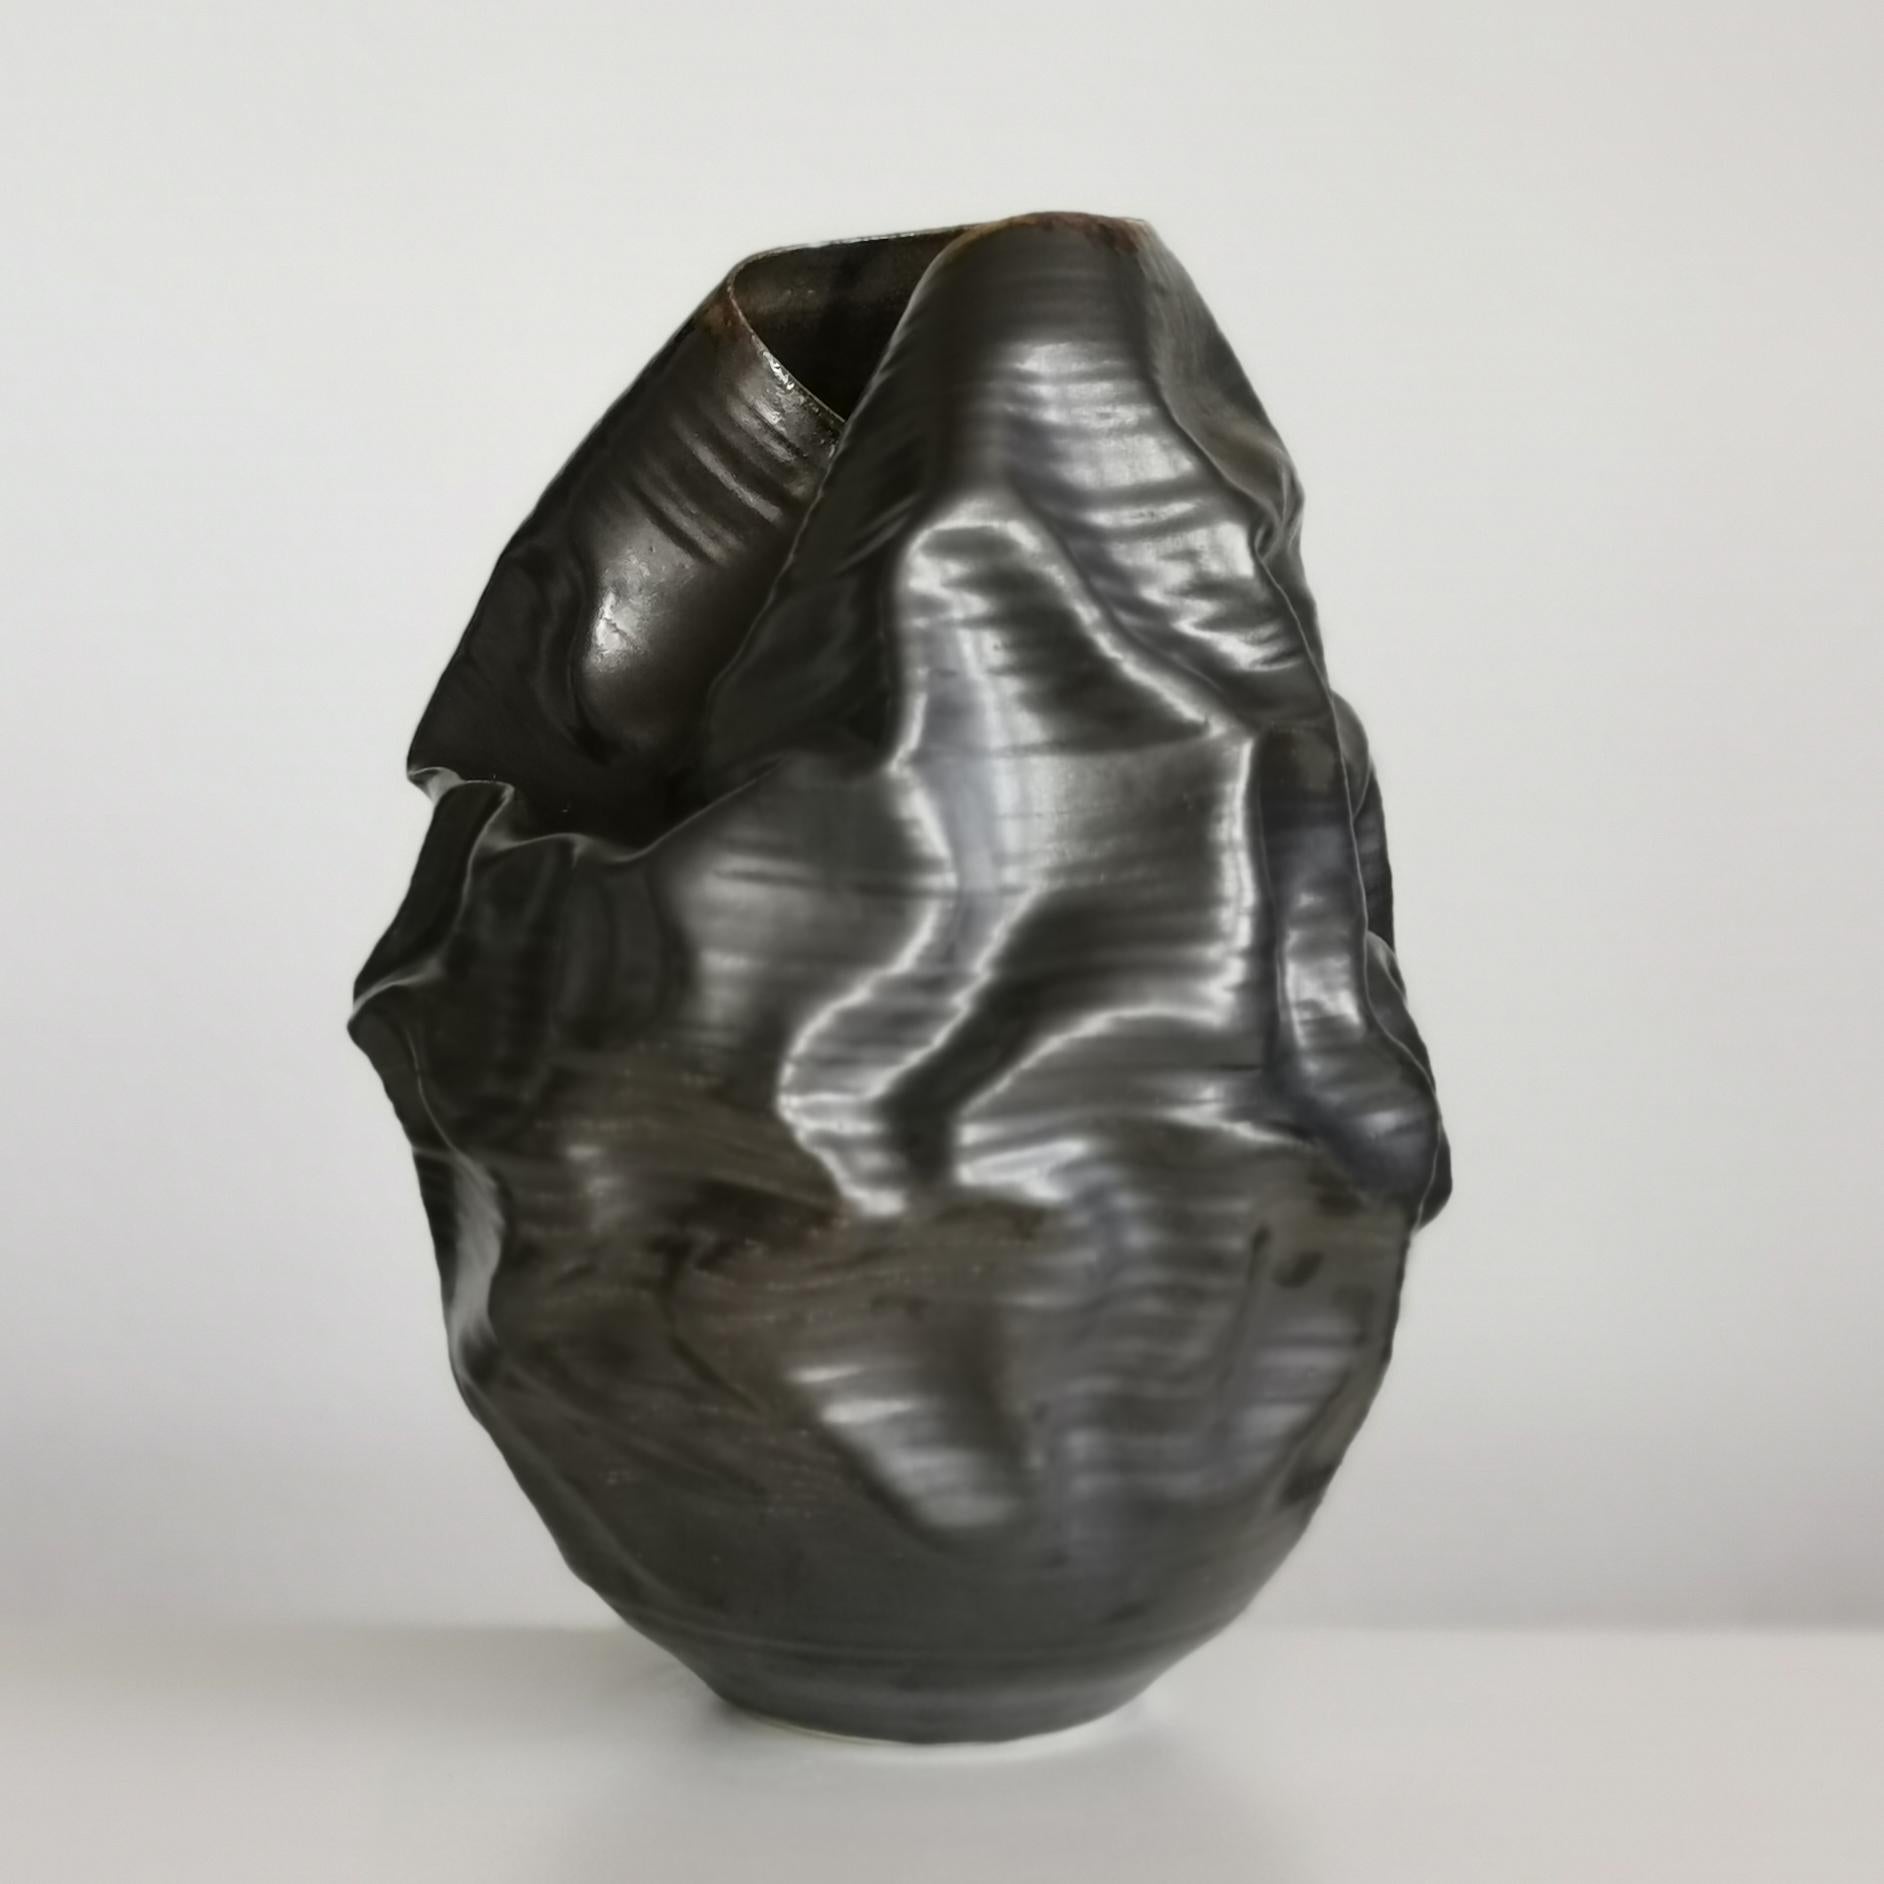 Organic Modern Black Metallic Dehydrated Form No 36 Ceramic Vessel by Nicholas Arroyave-Portela